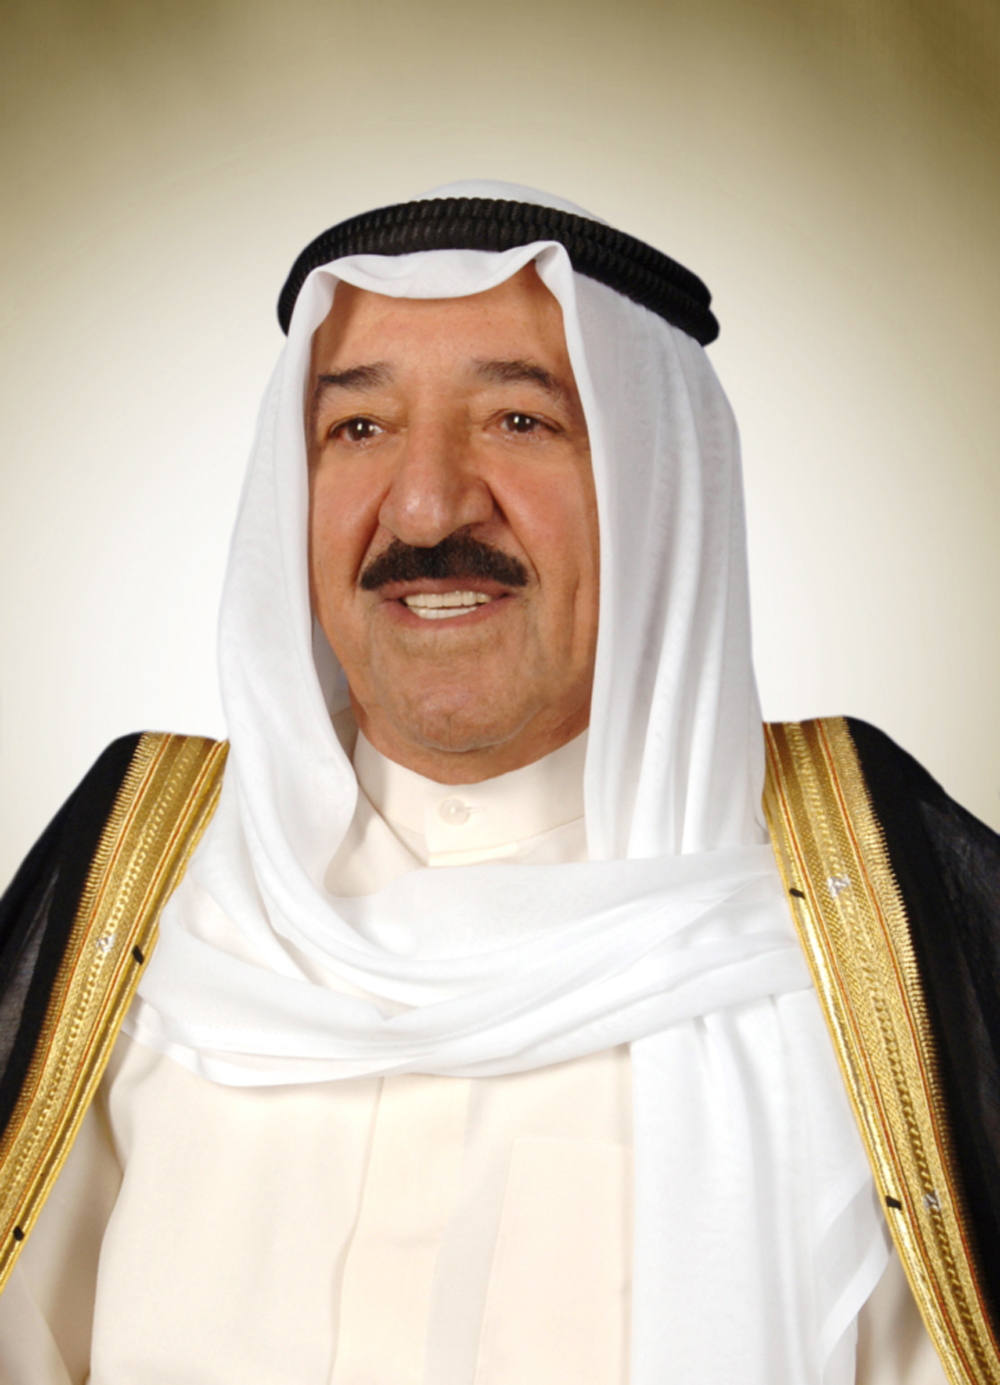 His Highness the Amir of Kuwait Sheikh Sabah Al-Ahmad Al-Jaber Al-Sabah